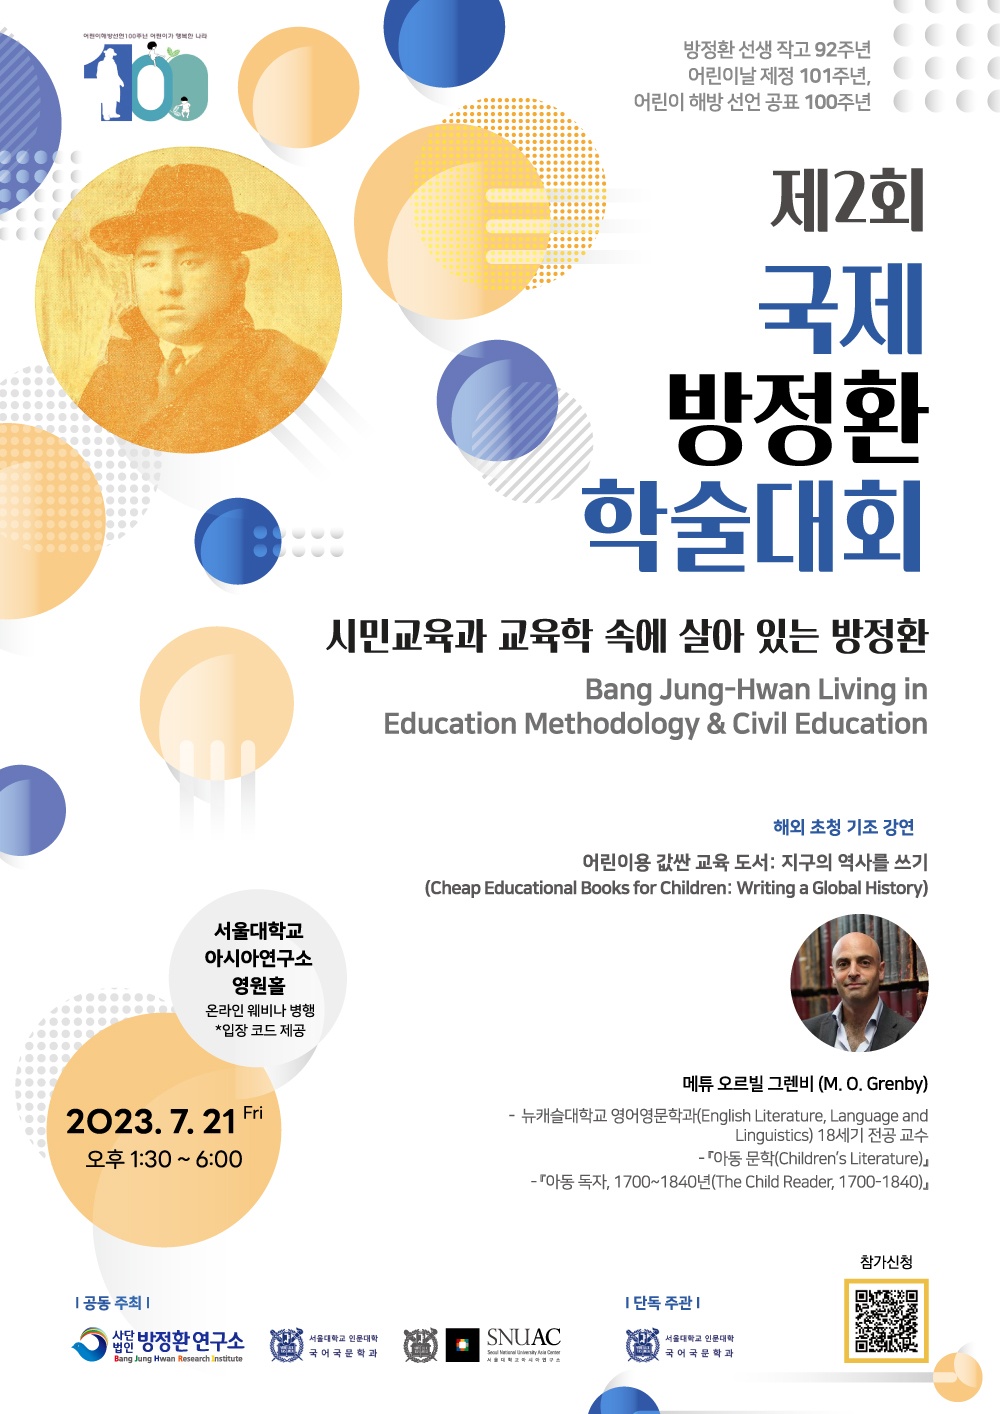 The 2nd International Bang Jung-Hwan Conference